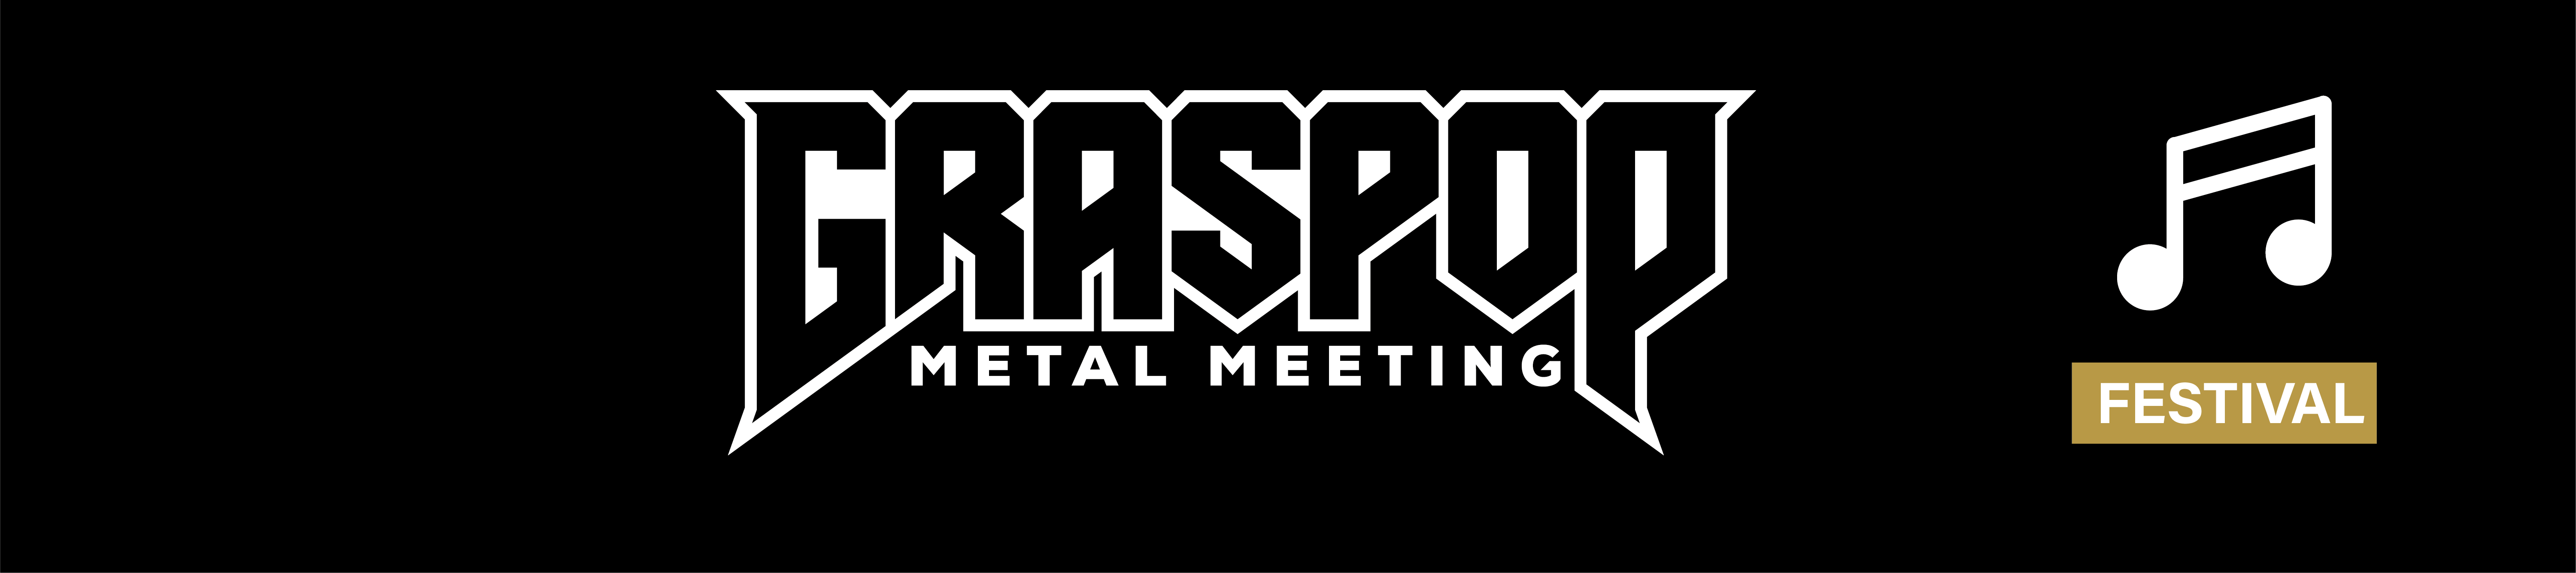 Graspop Metal Meeting - Festival Shuttles